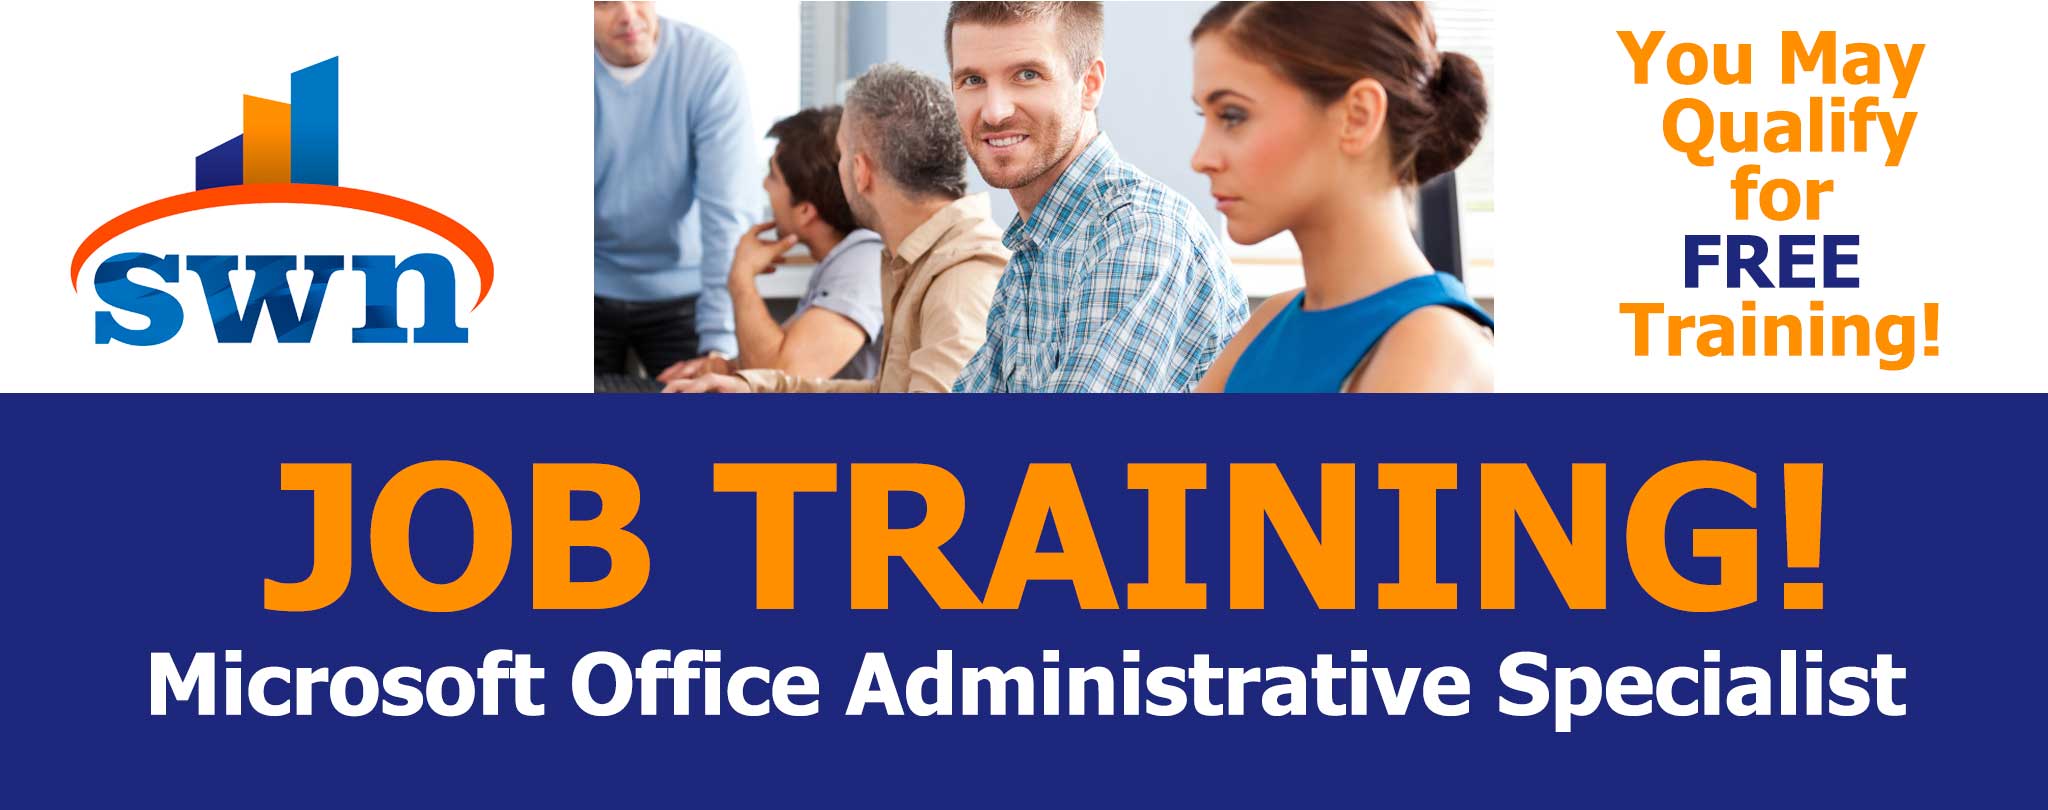 Job Training: Microsoft Office Administrative Specialist